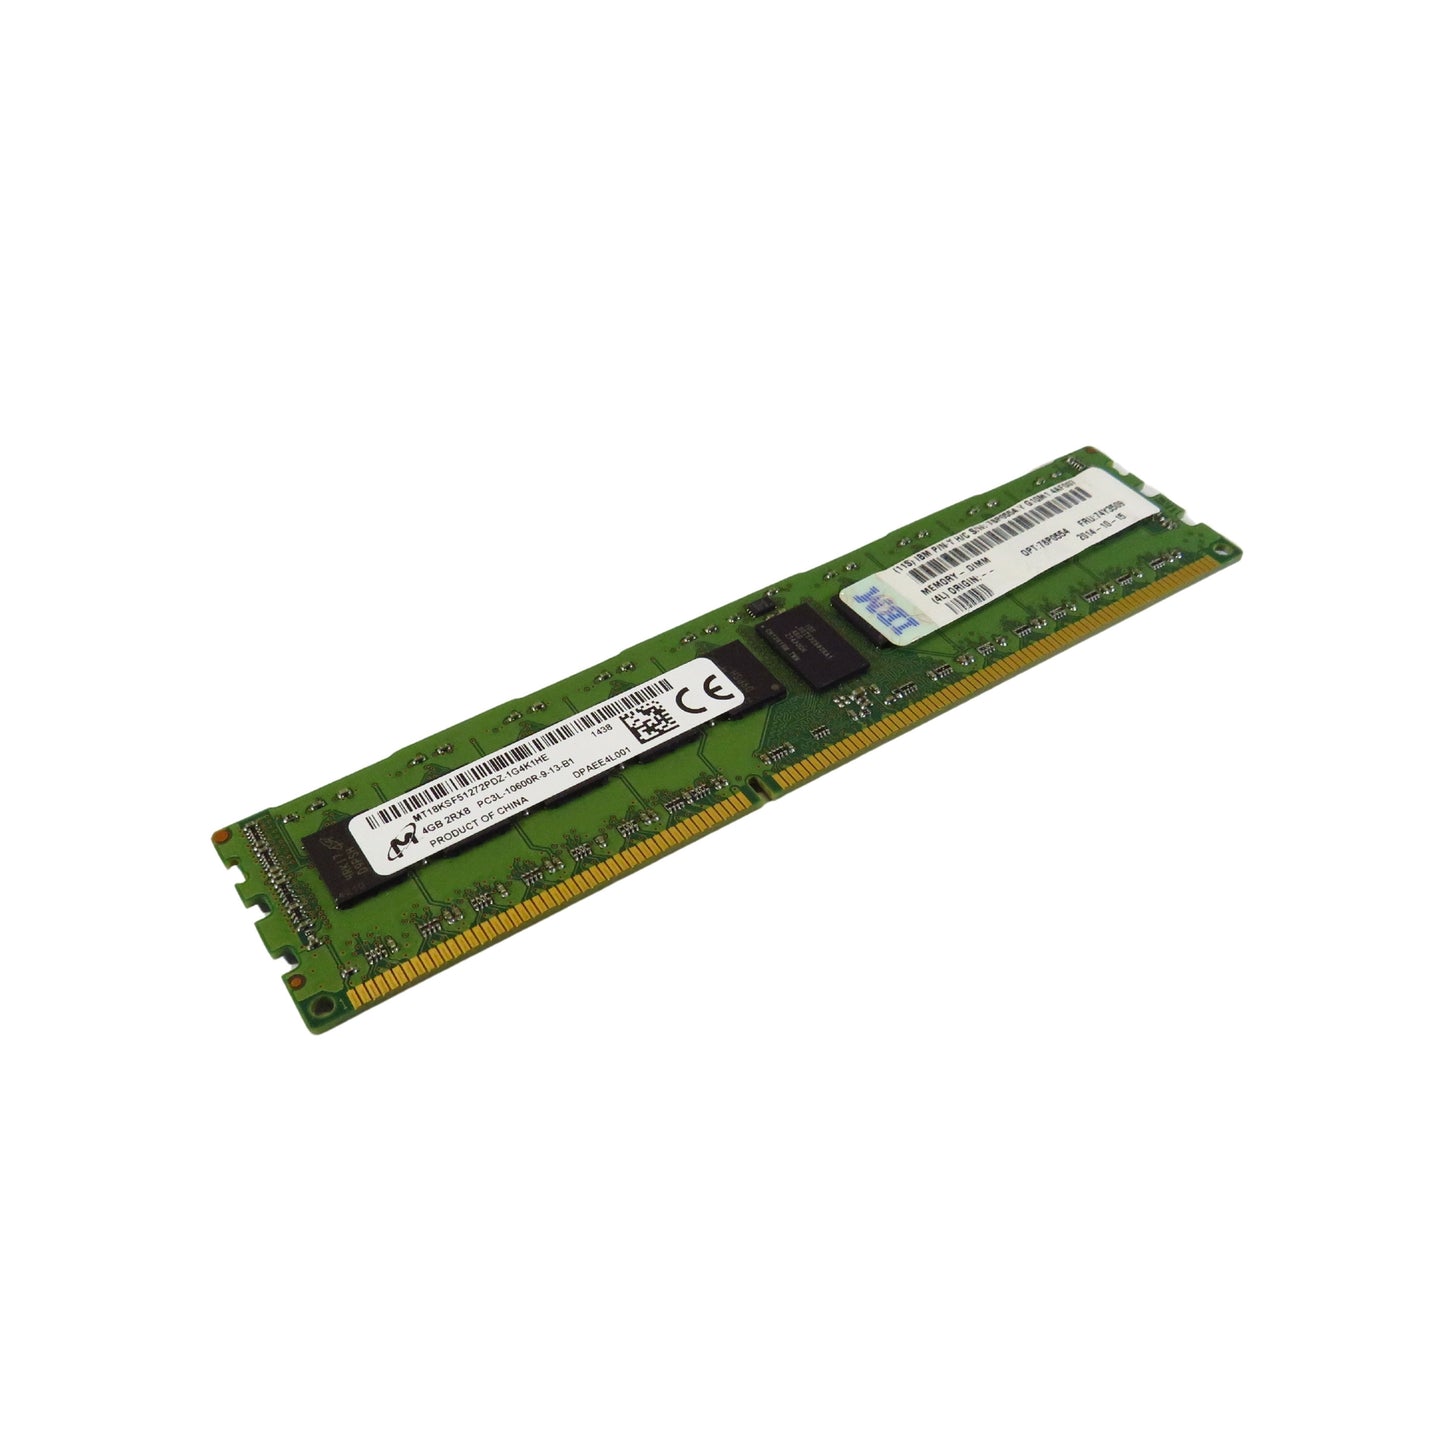 Micron MT18KSF51272PDZ-1G4 4GB 2Rx8 PC3L-10600 1333MHz DDR3 Server Memory (Refurbished)